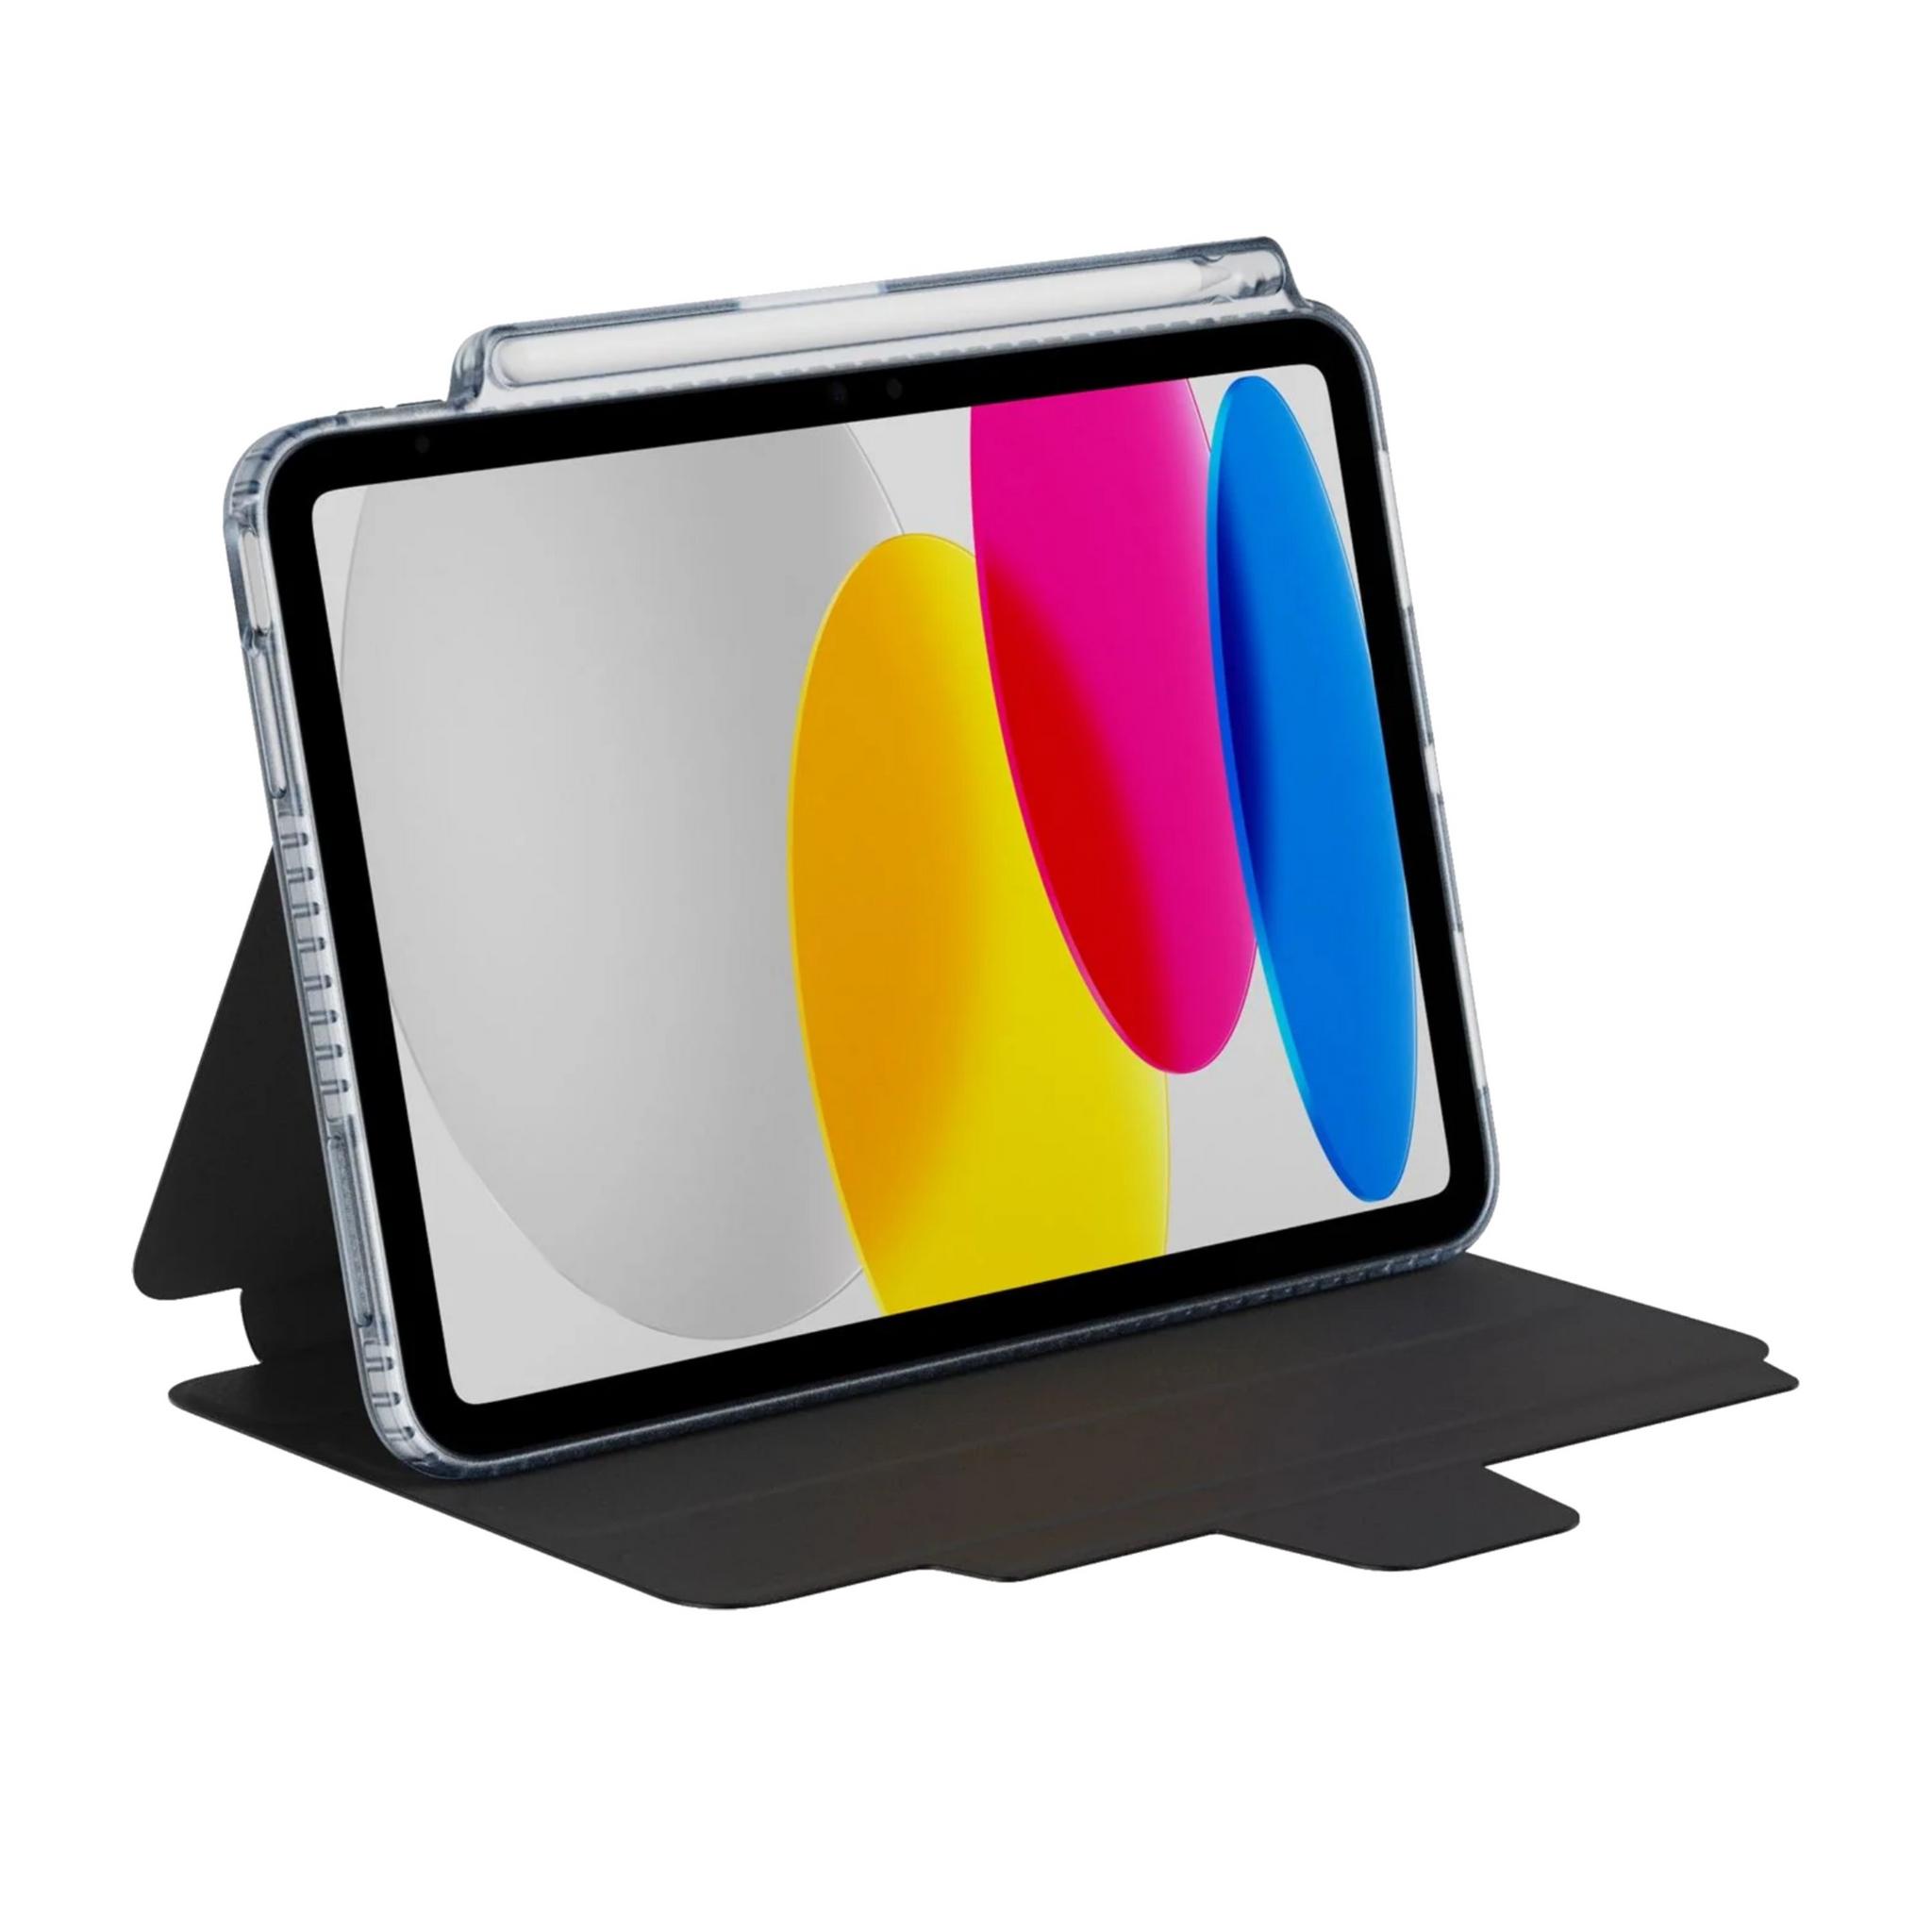 TECH21 EvoFolio Case for iPad 10th Gen, T21-10204- Black